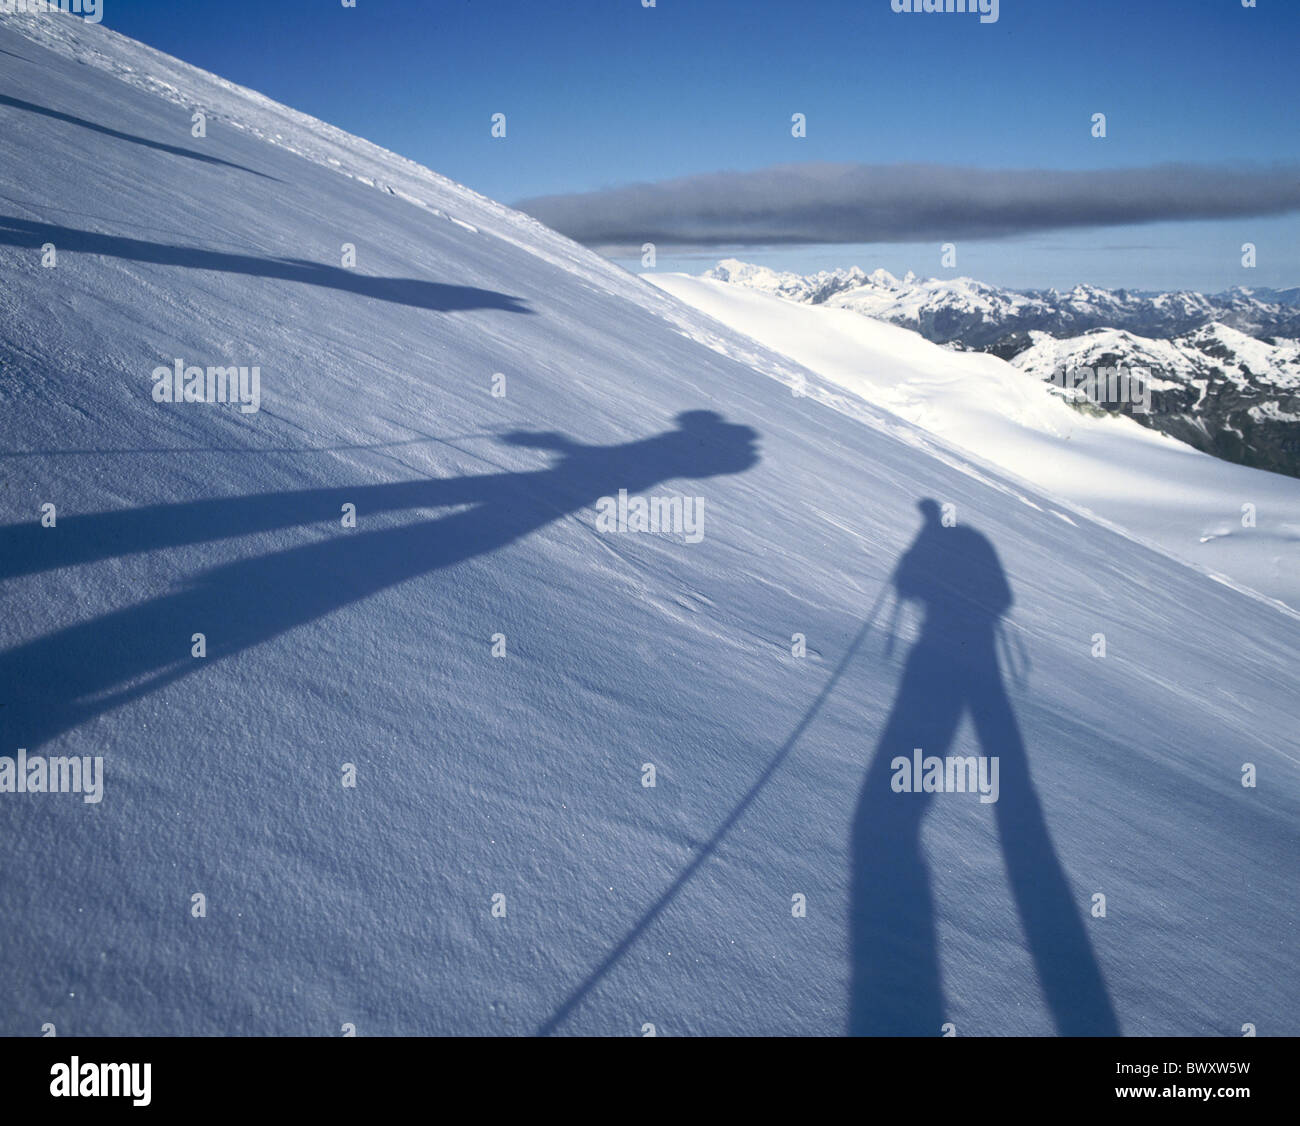 Montagna sport alpinismo alpinisti sfumature simboli coperto di neve e neve pendio di neve Foto Stock